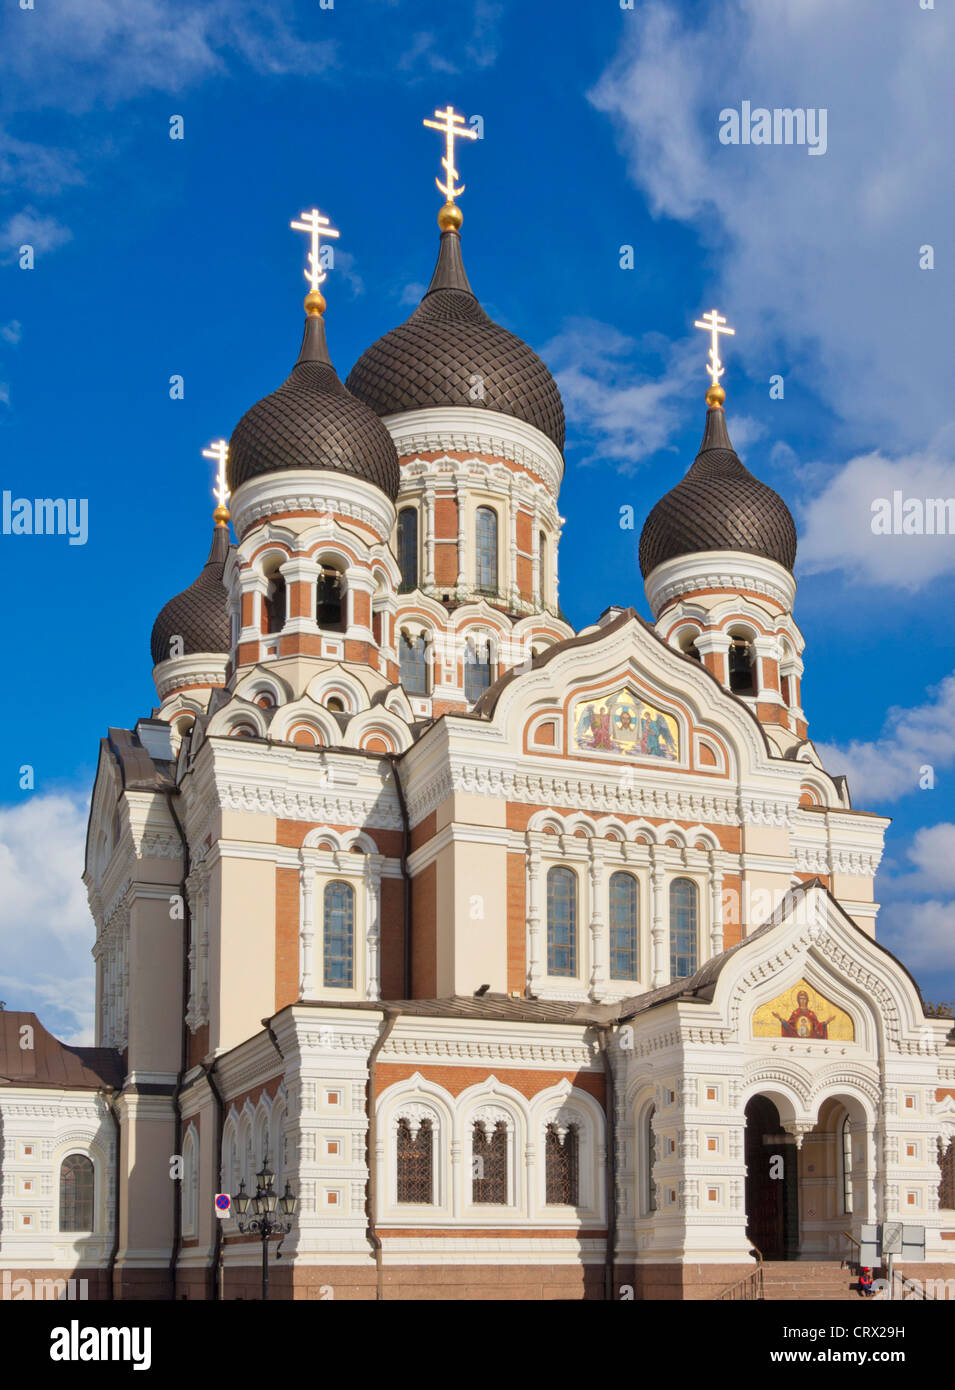 Tallinn old town Toompea Hill Alexander Nevsky cathedral  lossi plats Estonia EU Europe. Stock Photo